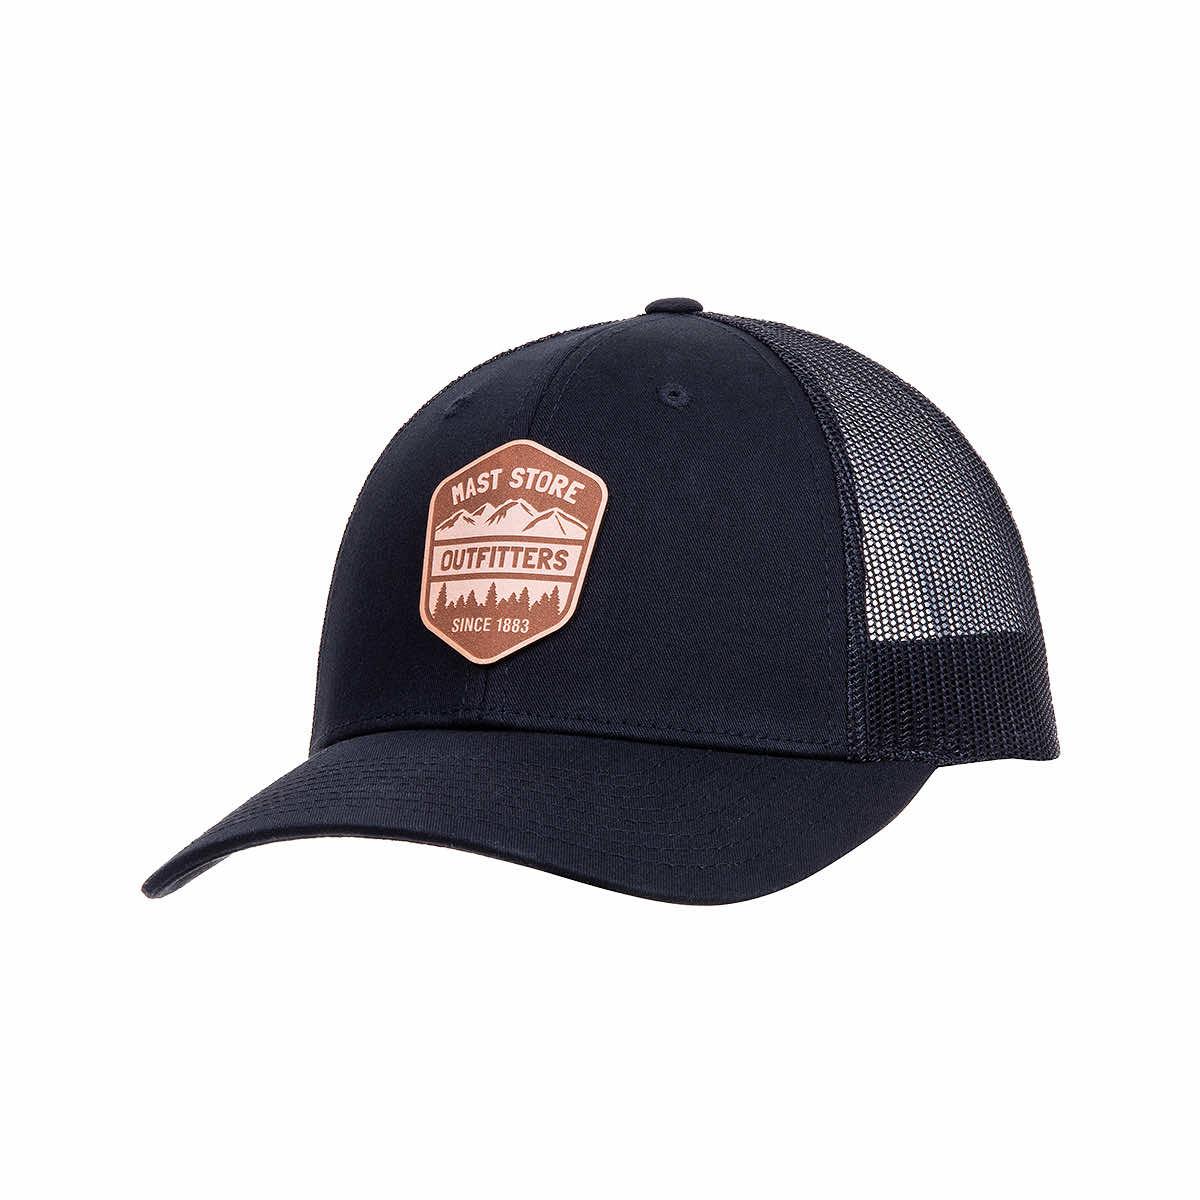 Wholesale DALIX Plain Blank Trucker Hat Mesh Cap for your store